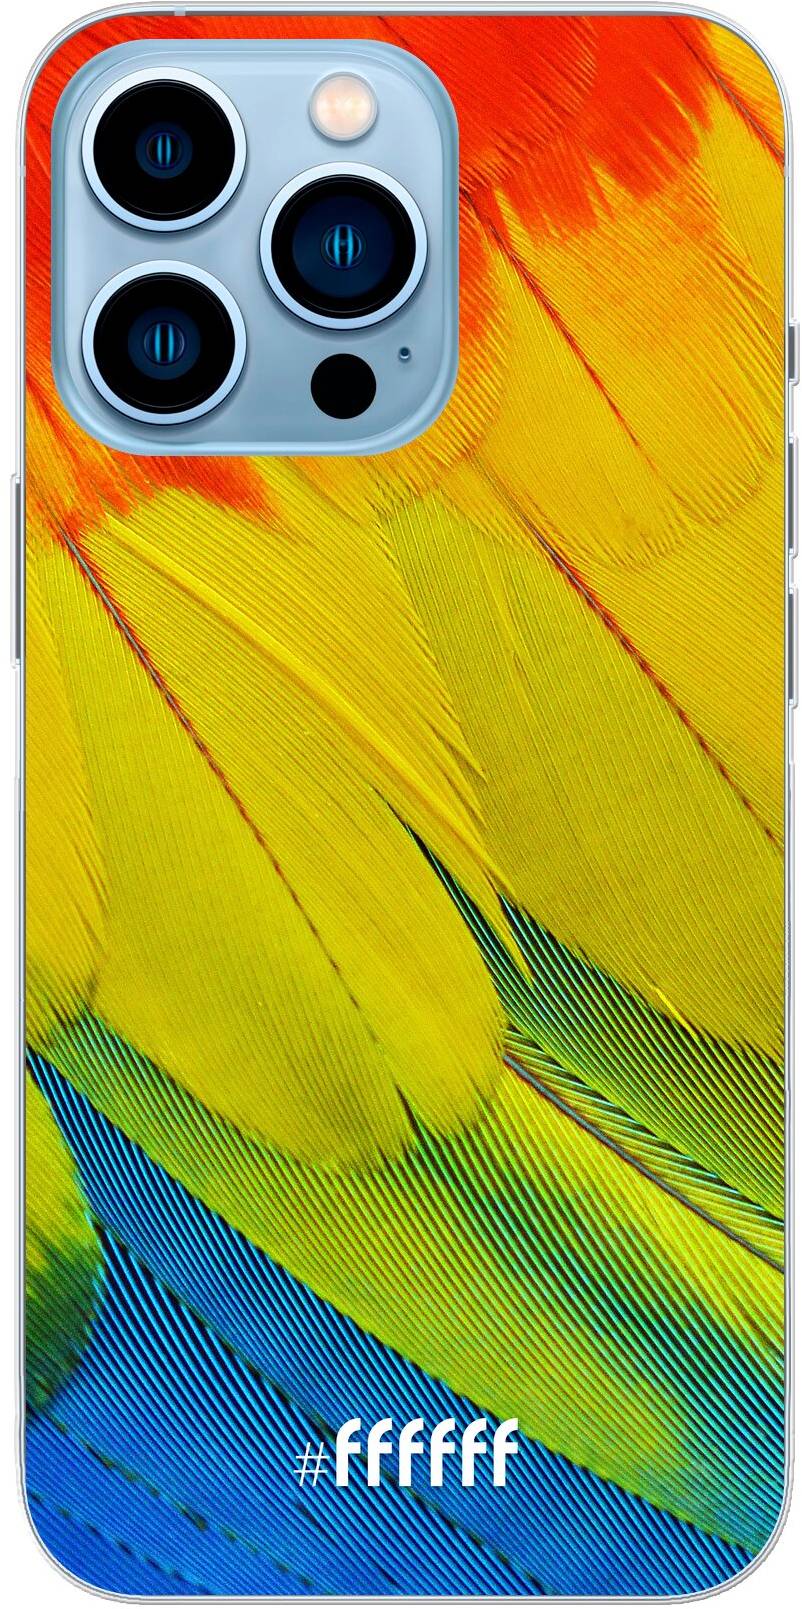 Macaw Hues iPhone 13 Pro Max